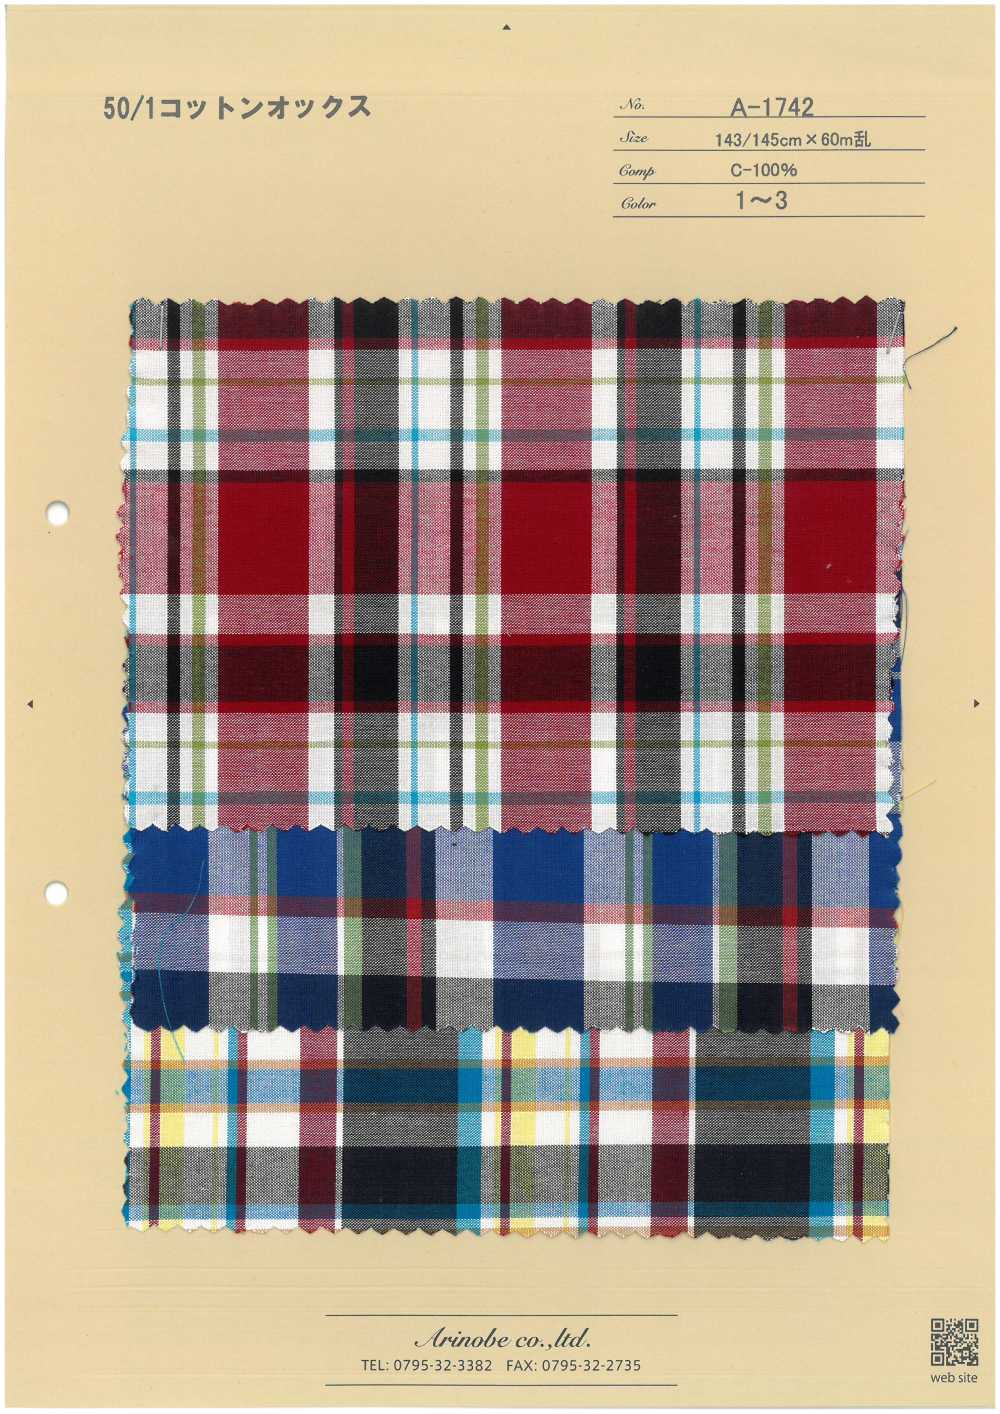 A-1742 50/1 Baumwoll-Oxford[Textilgewebe] ARINOBE CO., LTD.